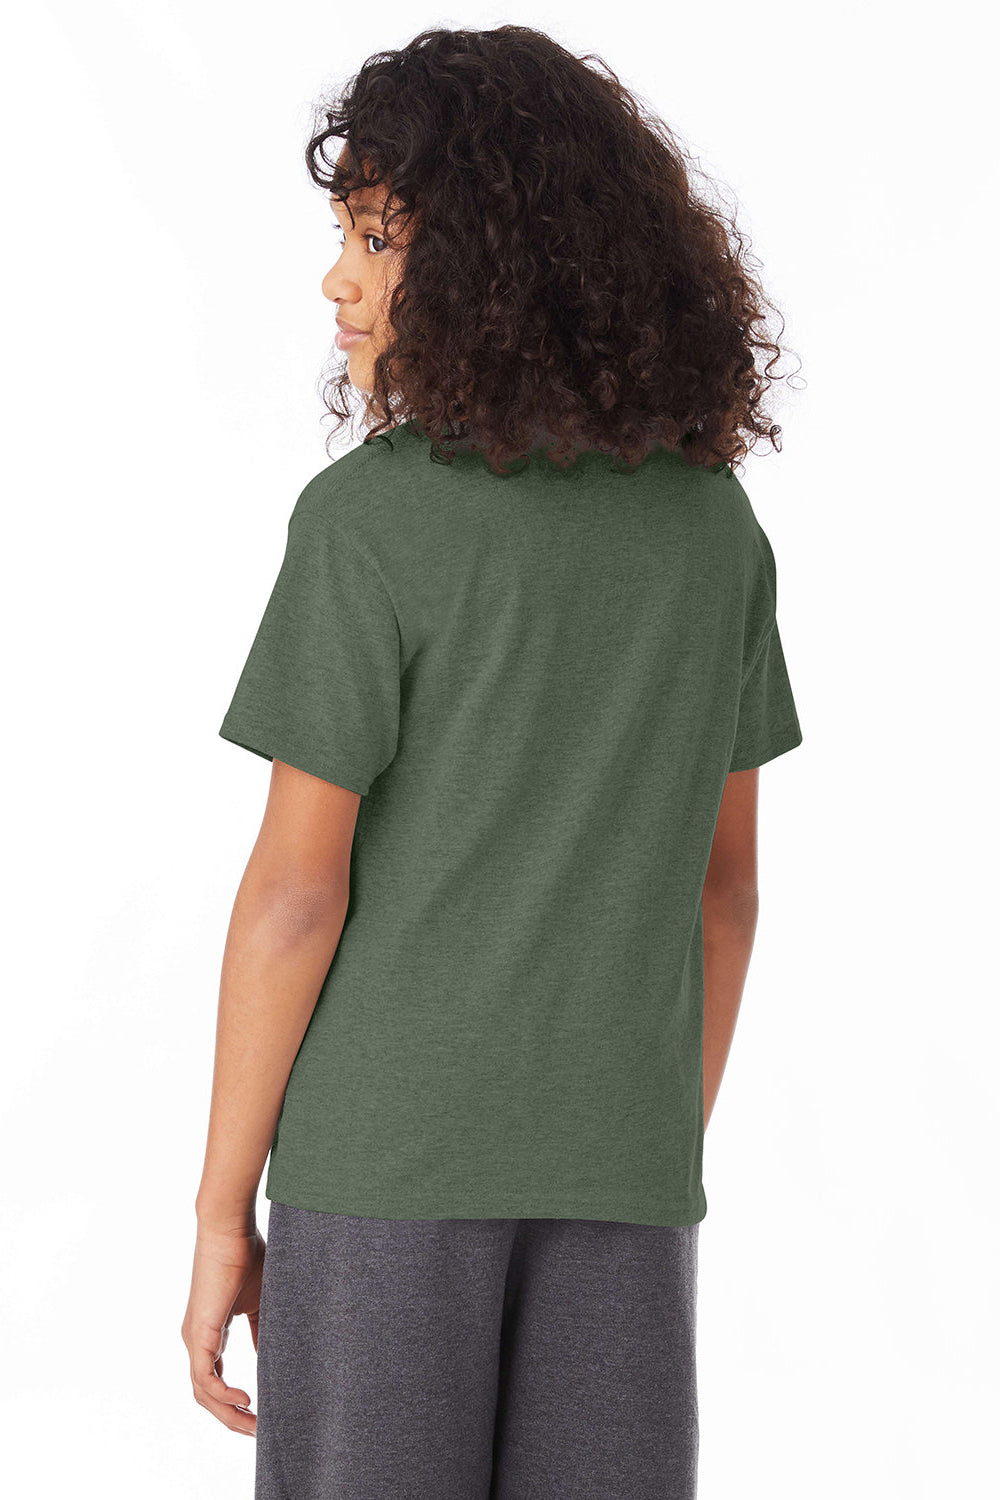 Hanes 5370 Youth EcoSmart Short Sleeve Crewneck T-Shirt Heather Green Back